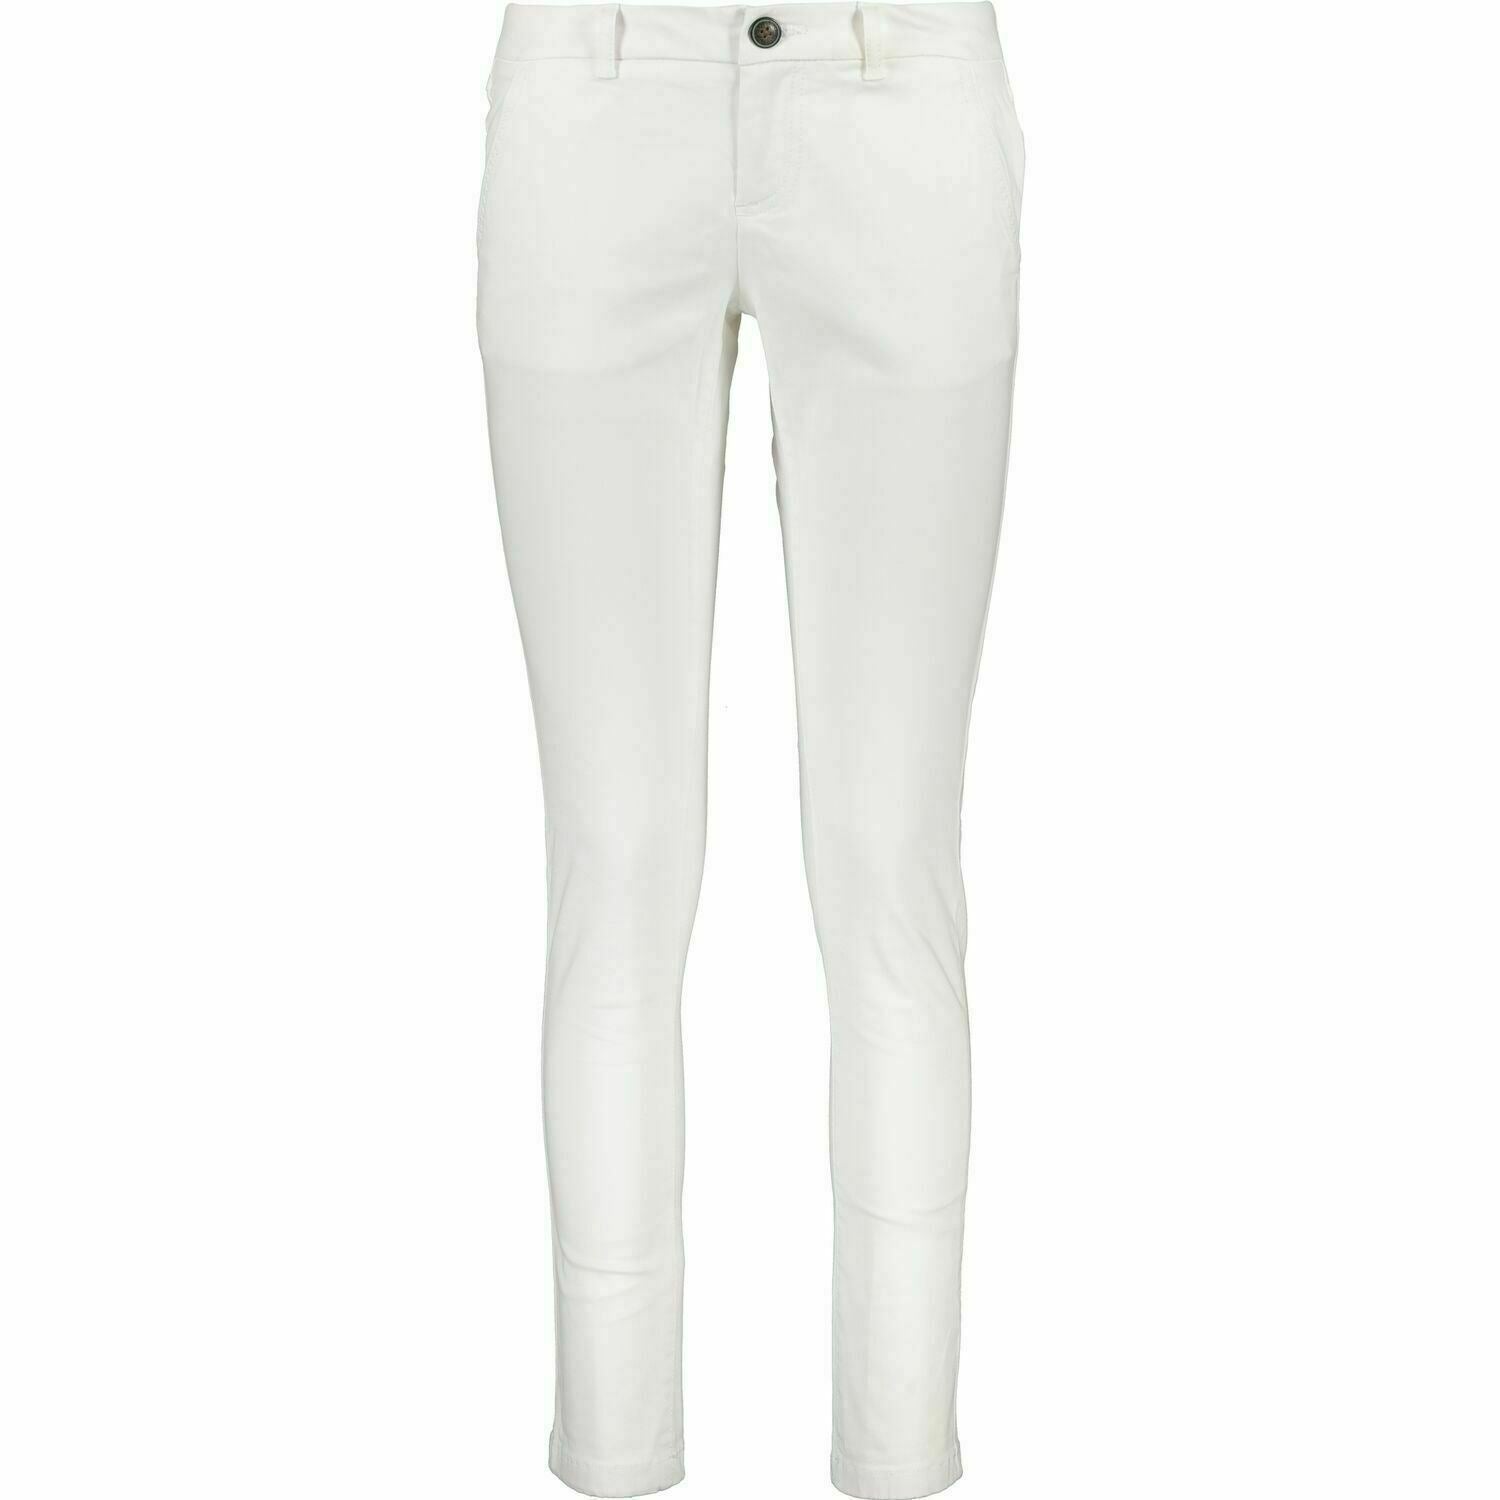 SUPERDRY Women's INTERNATIONAL SWEET Chinos Trousers Slim Fit, Optic White UK 14